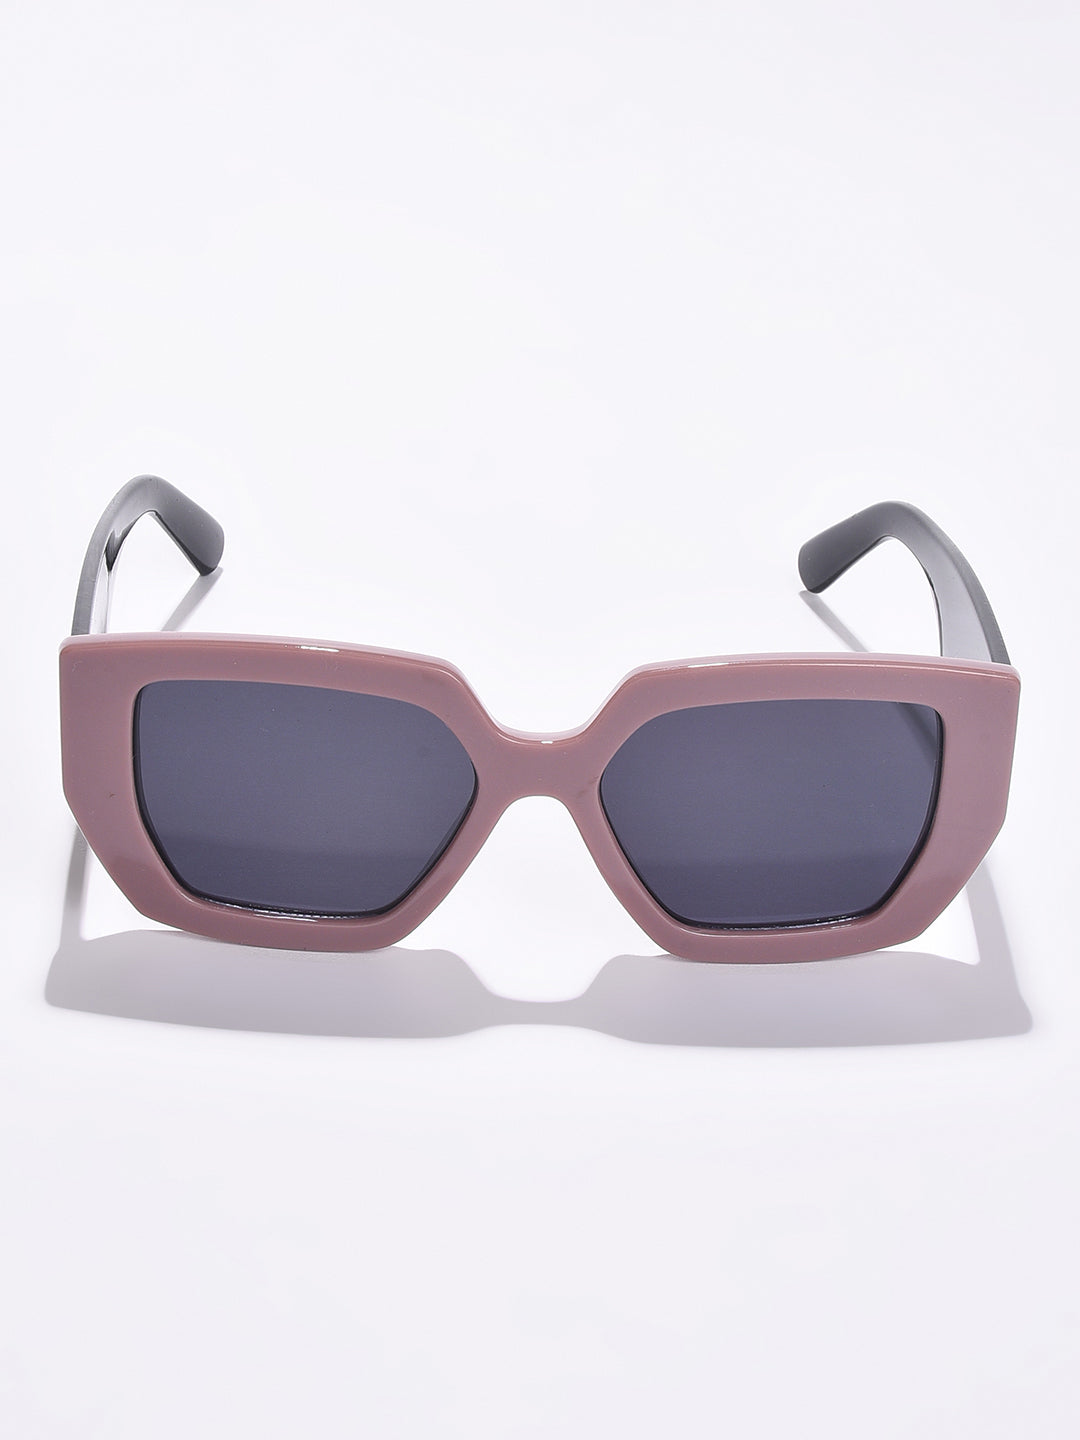 Black Lens Brown Wayfarer Sunglasses